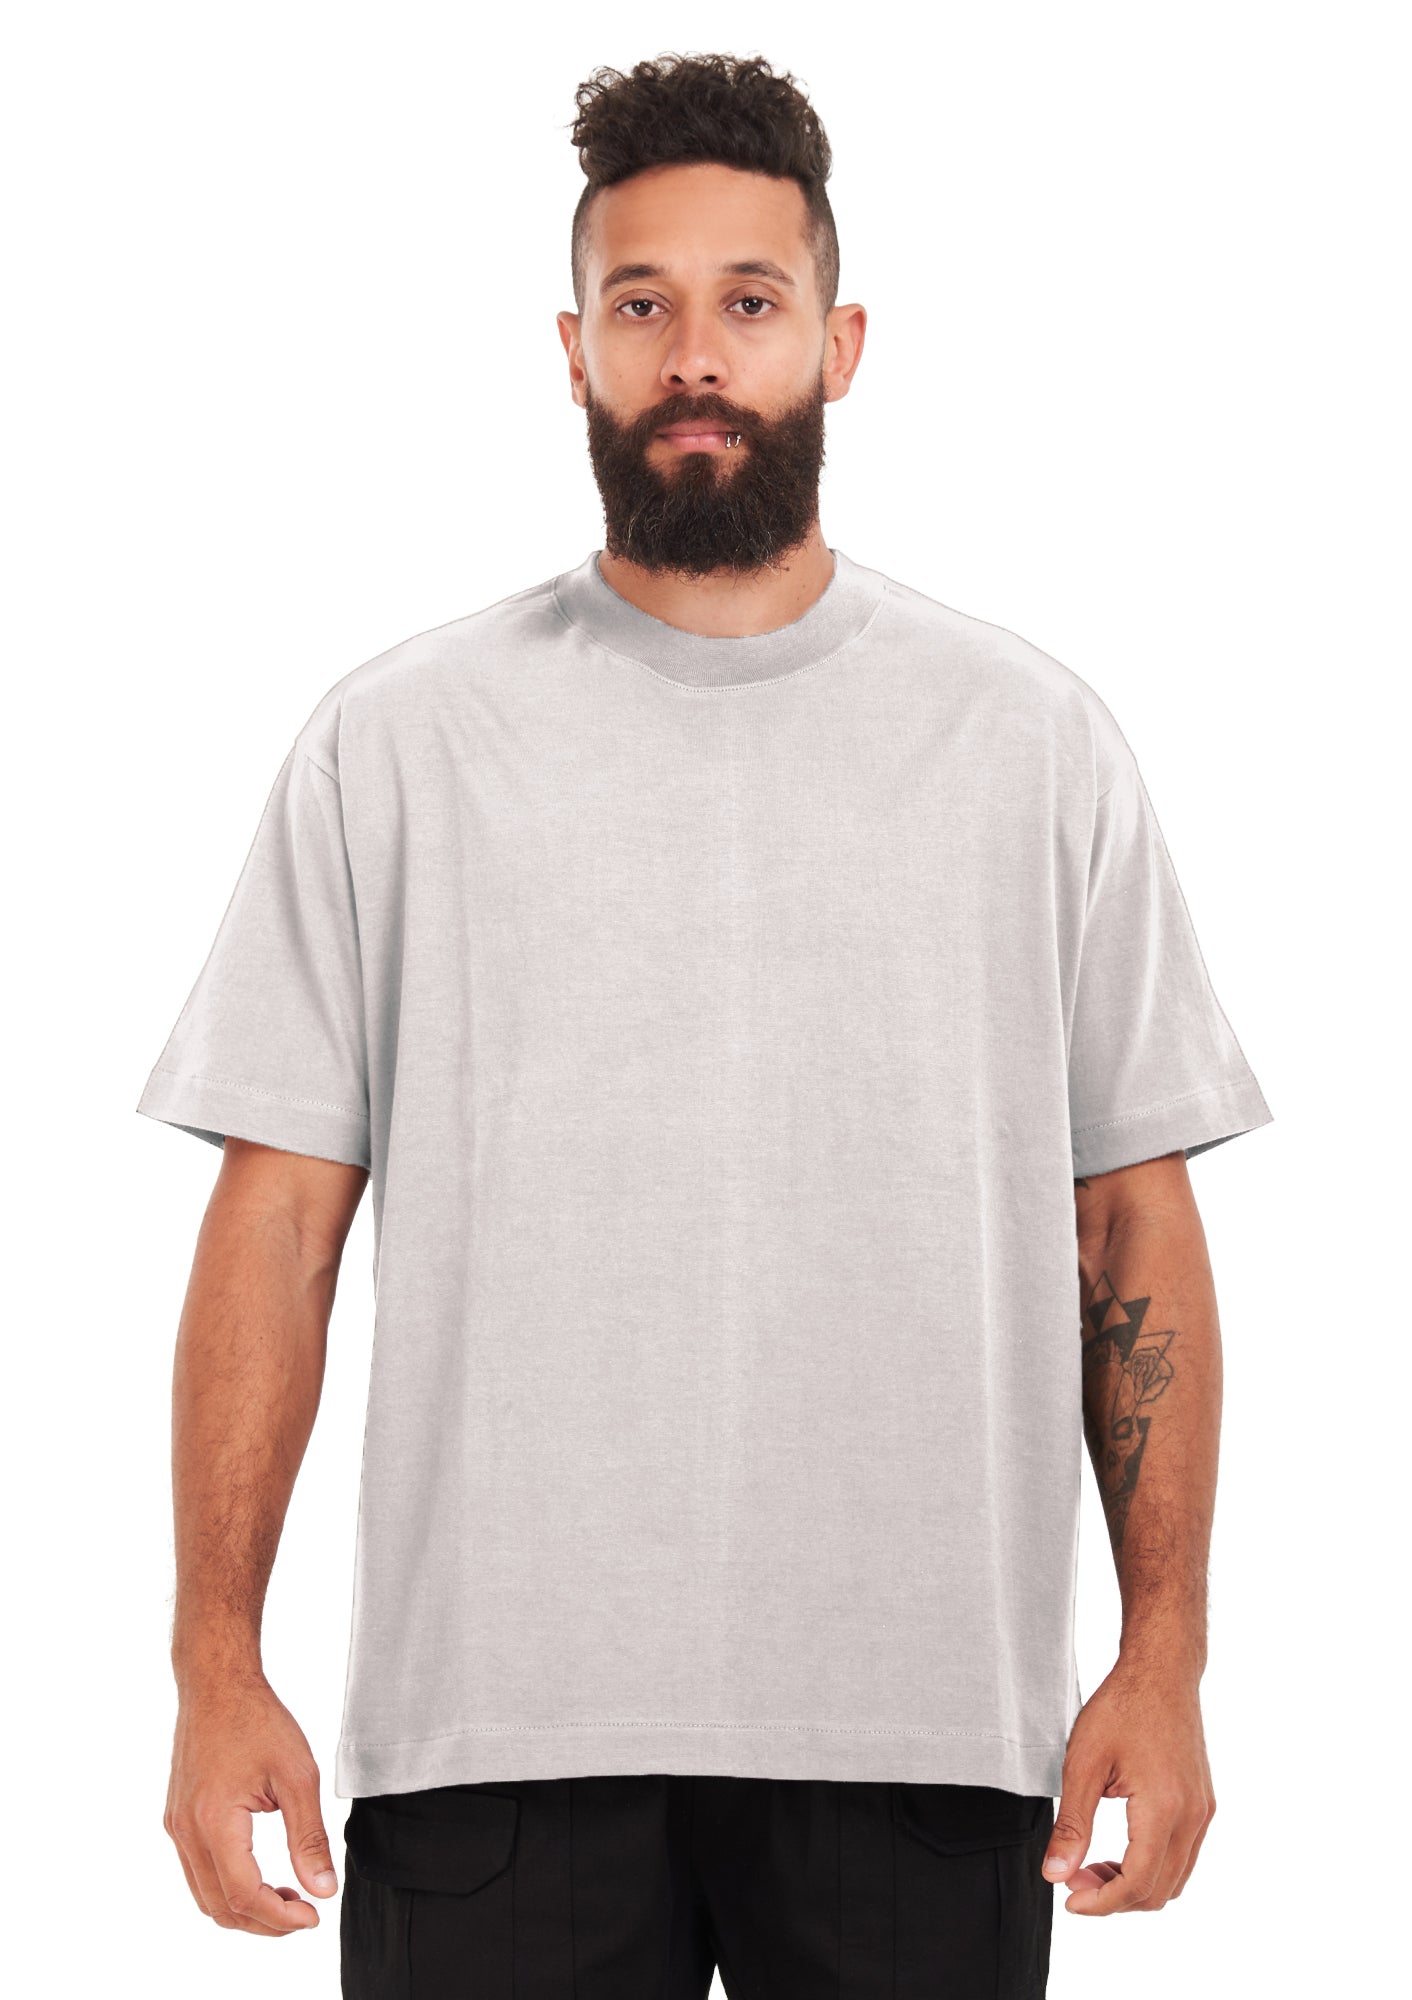 Oversized plain Silver T-shirt .